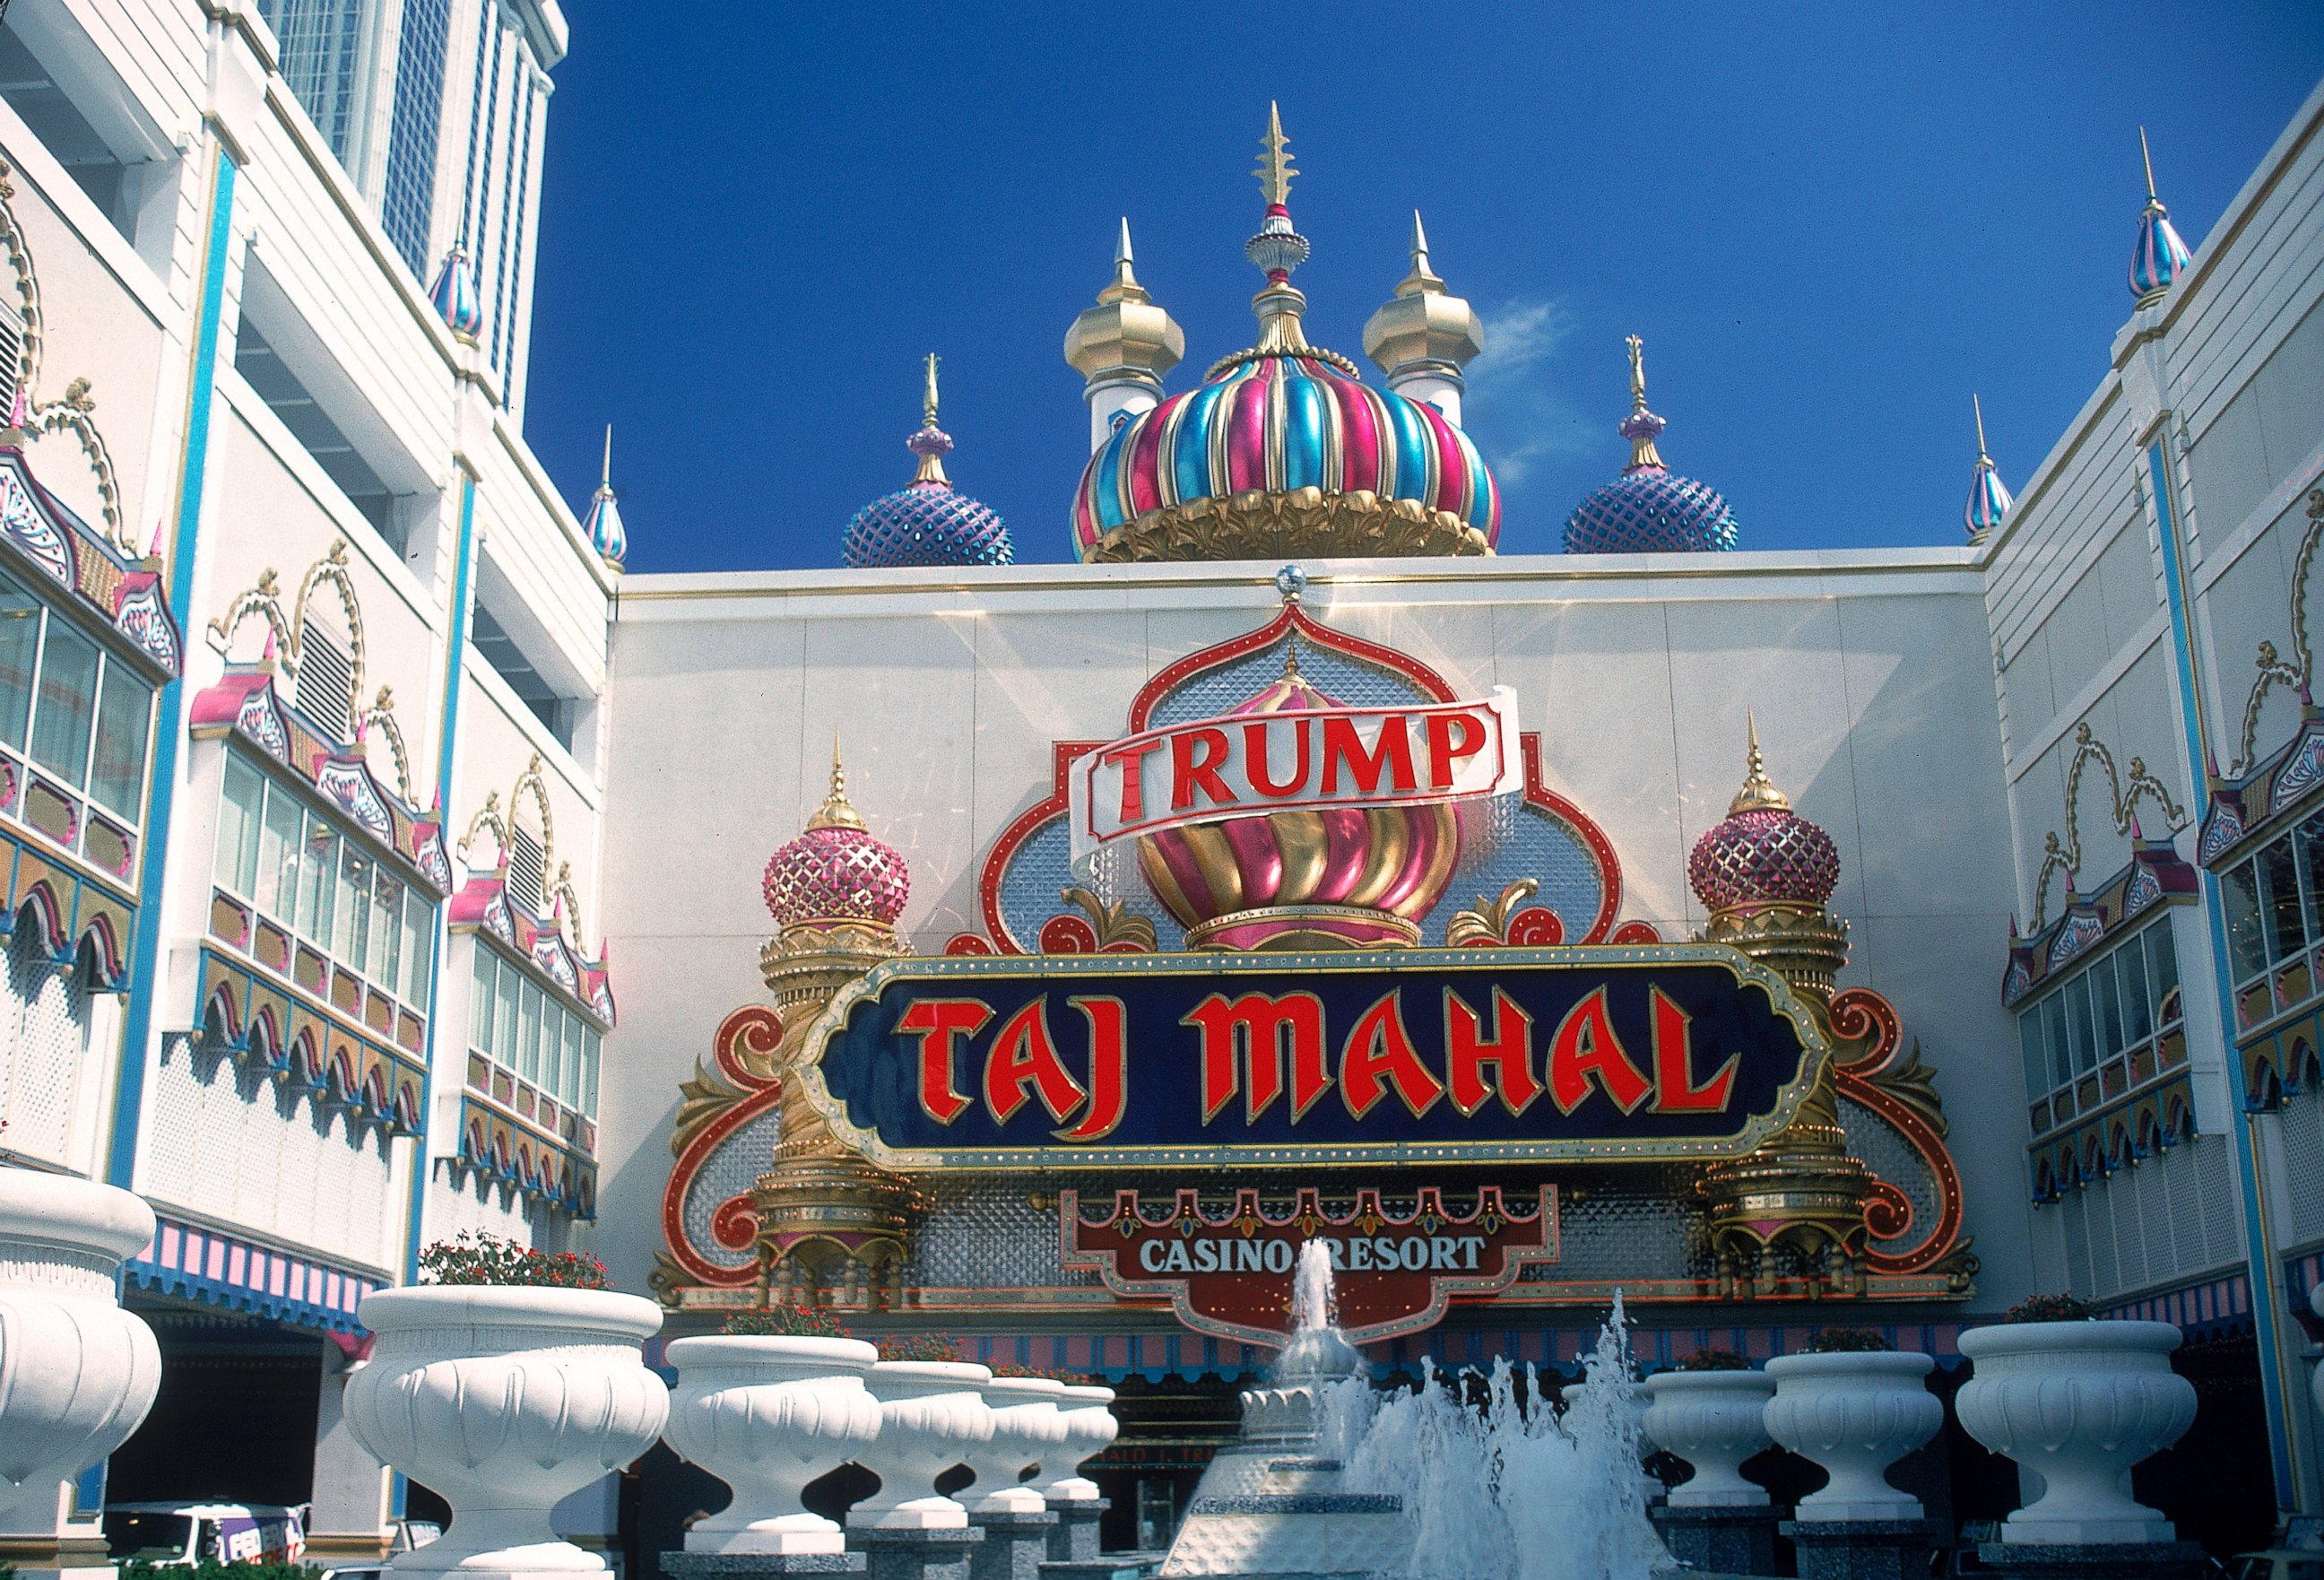 PHOTO: Exterior of Donald Trump's Taj Mahal casino and hotel resort.